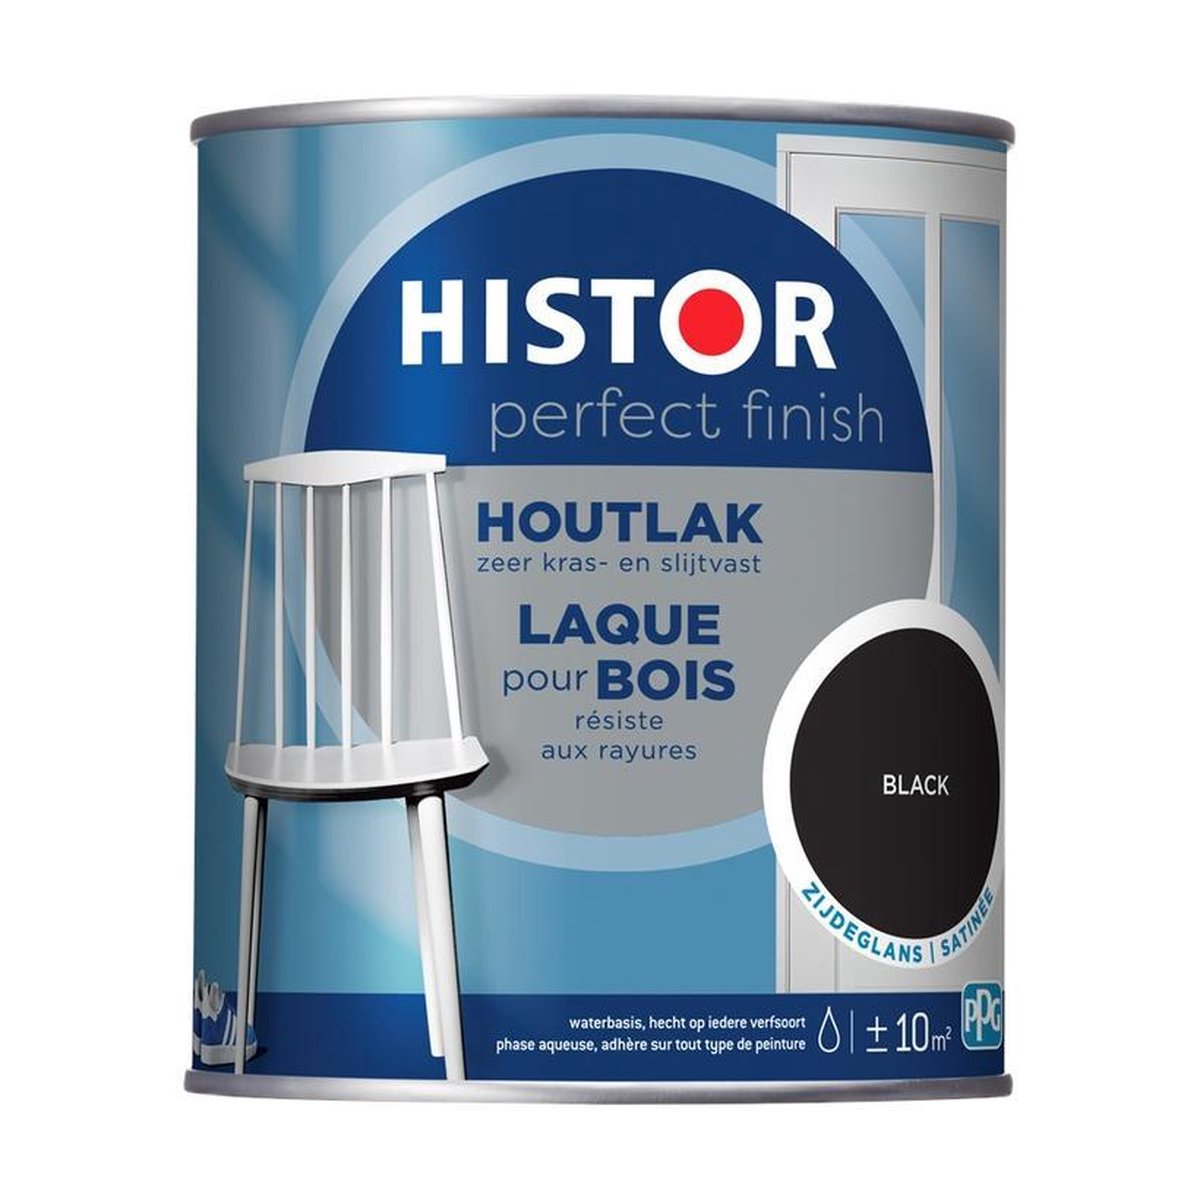 Histor Perfect Finish Houtlak- Zijdeglans - Black - 0,75 Liter | bol.com